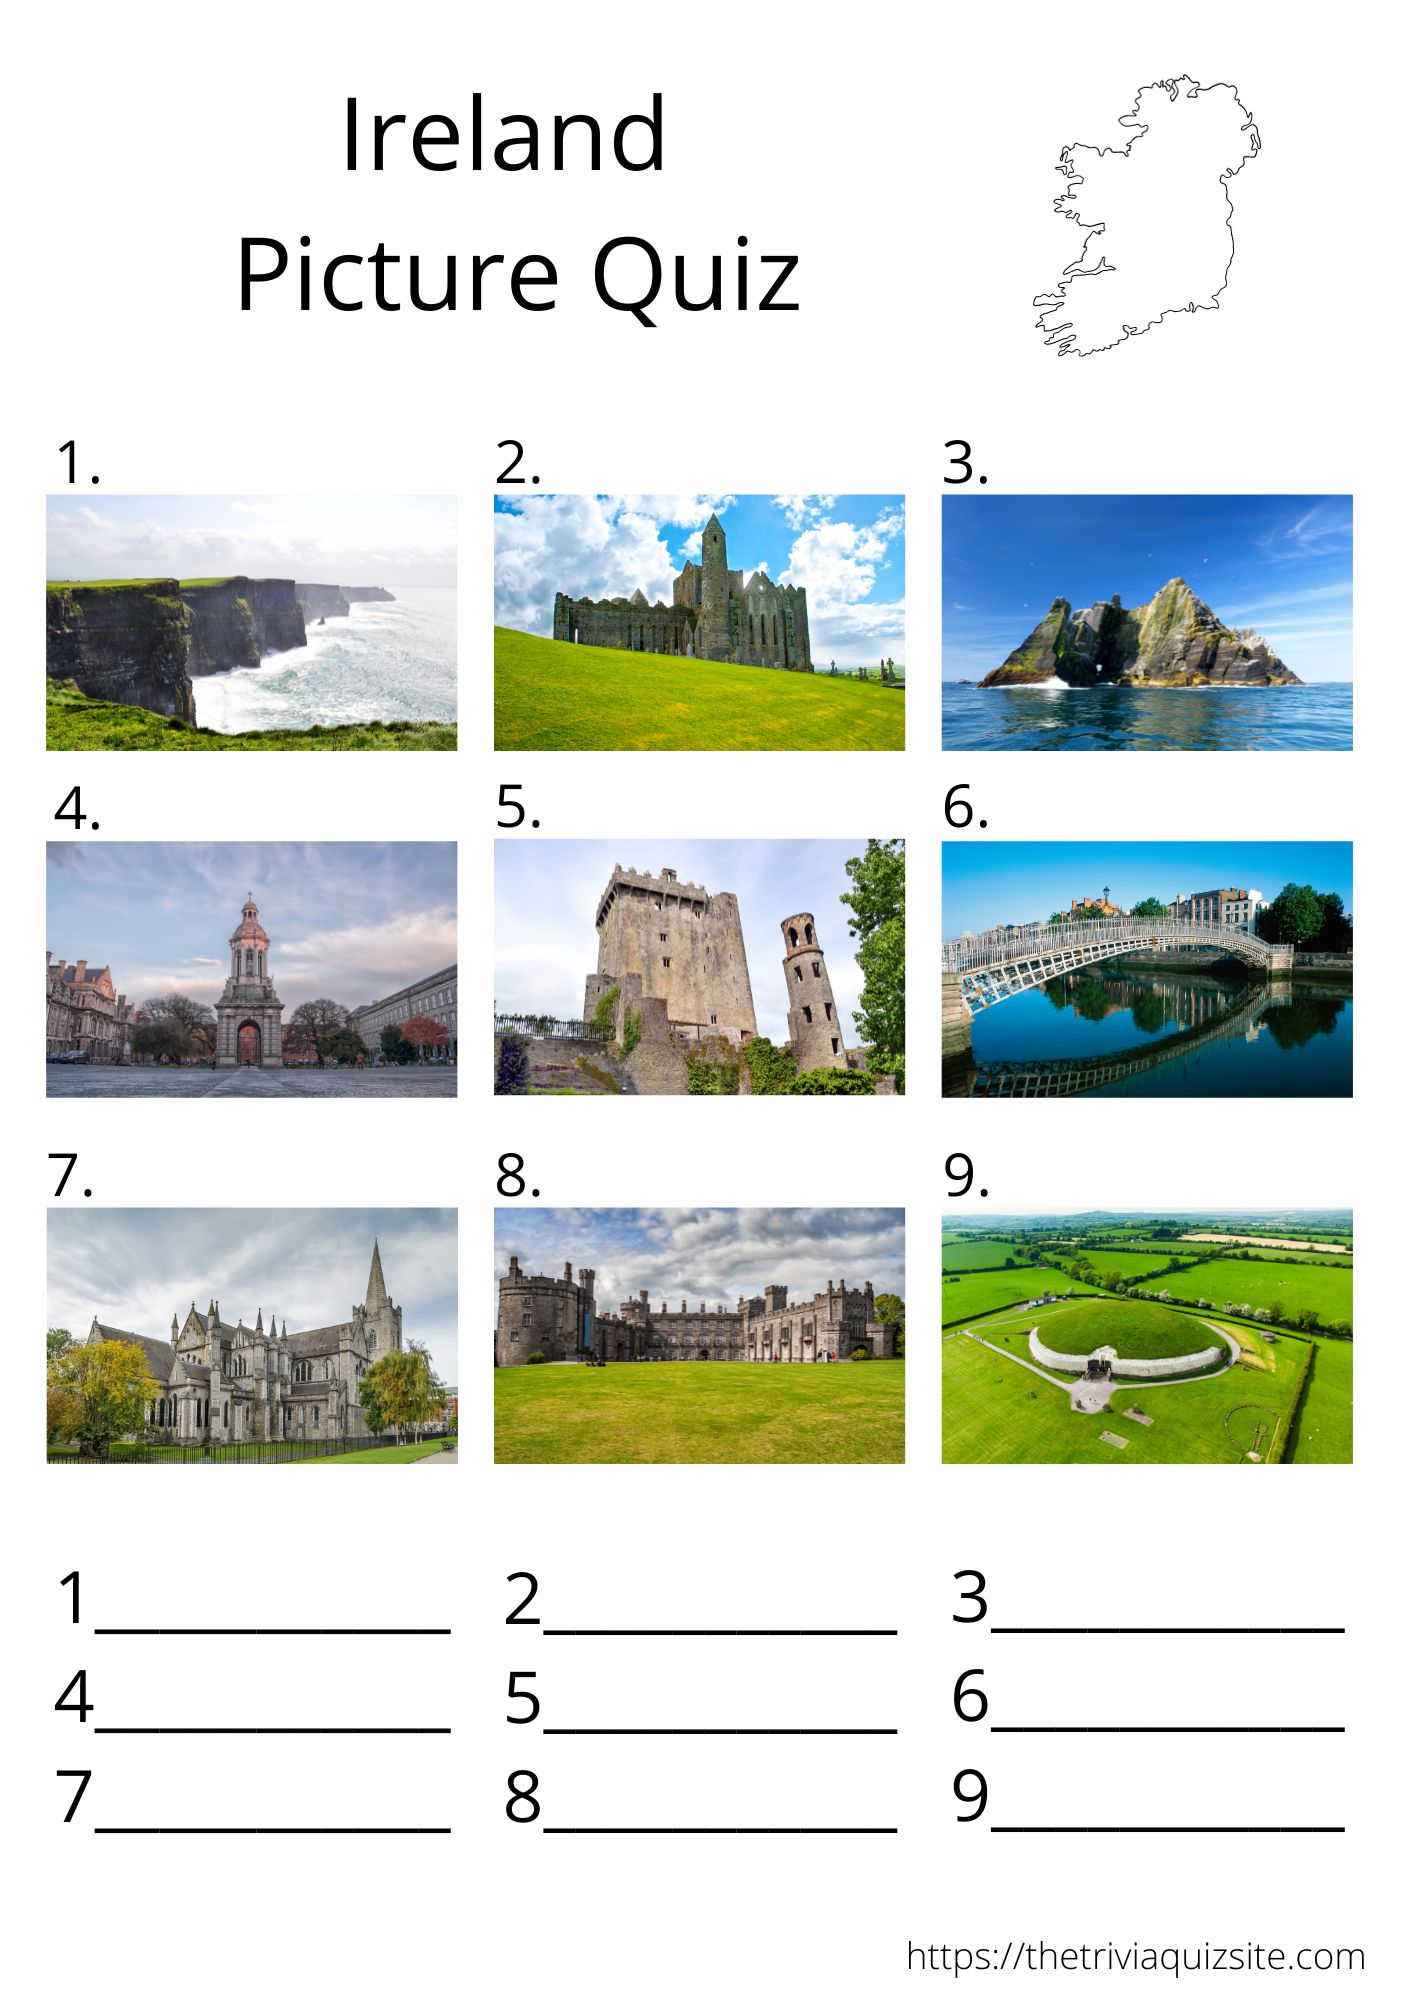 Ireland Picture quiz round